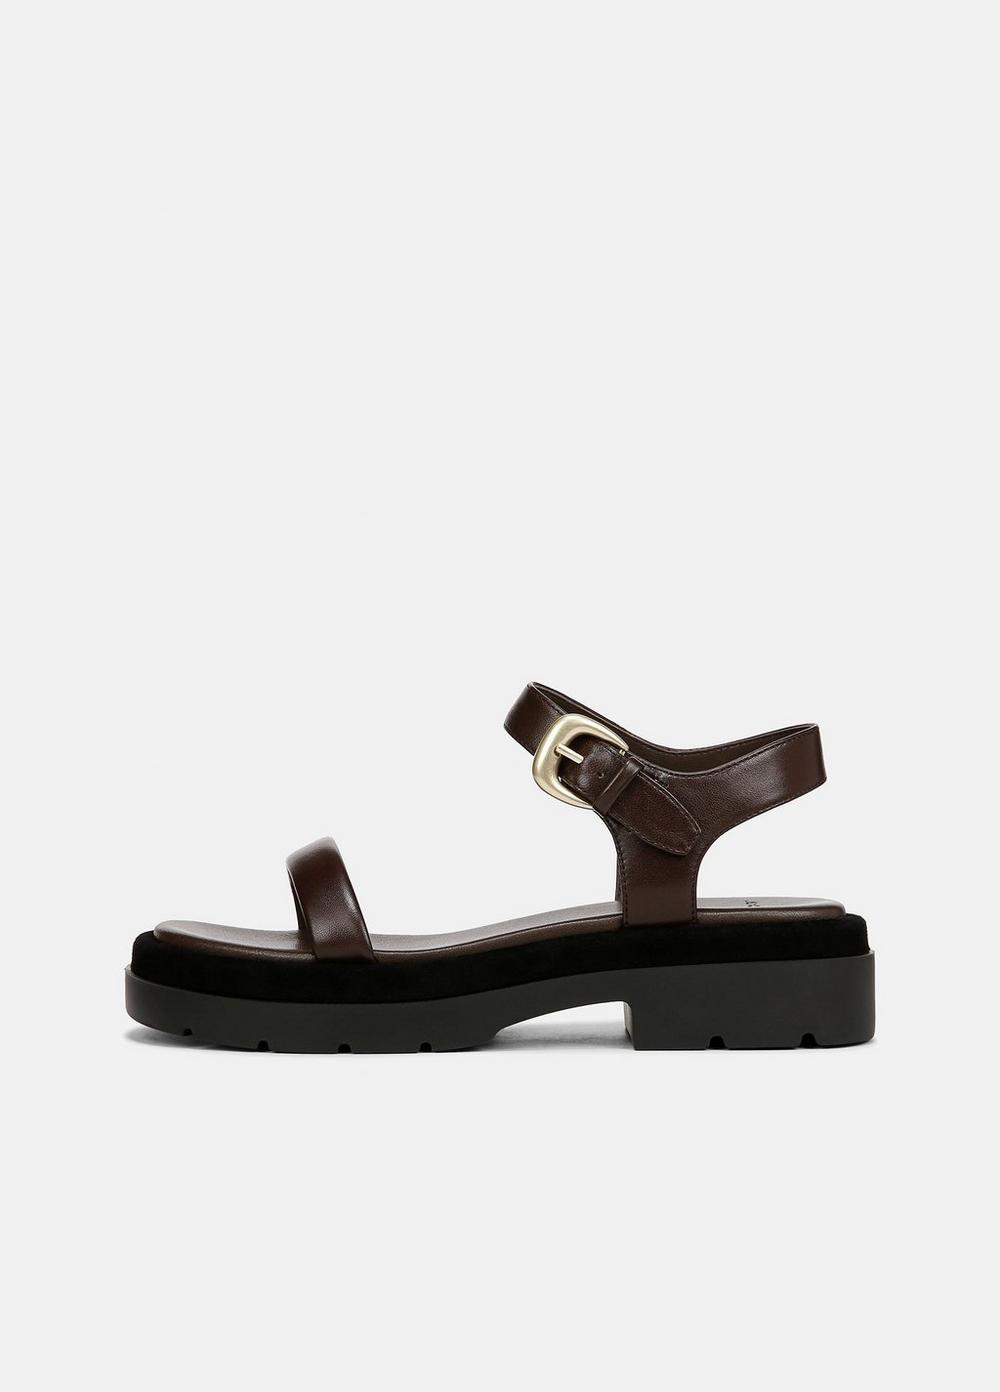 Heloise Leather Lug-Sole Sandal, Cacao Brown, Size 8 Vince